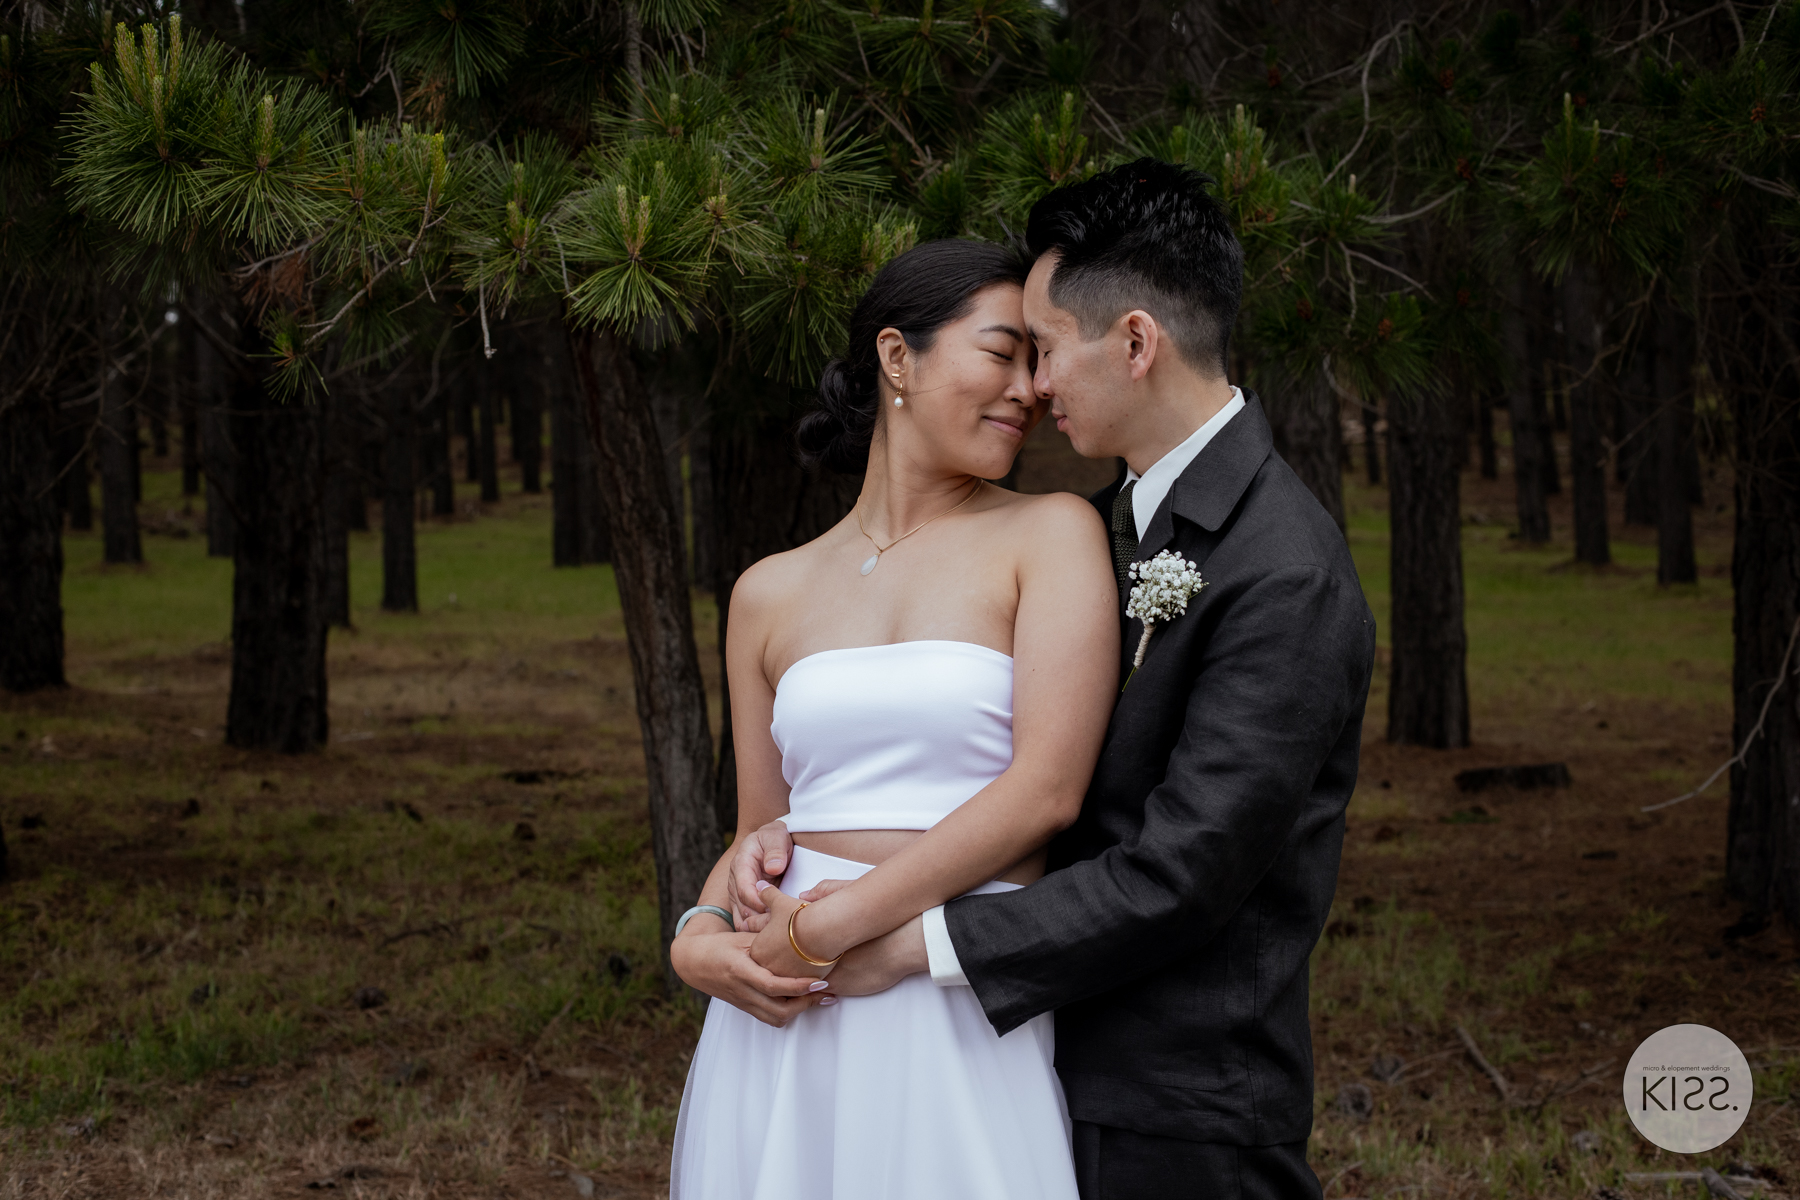 Wedding Photography Comfort Tips. Forest Weddings, elopements & Micro Weddings